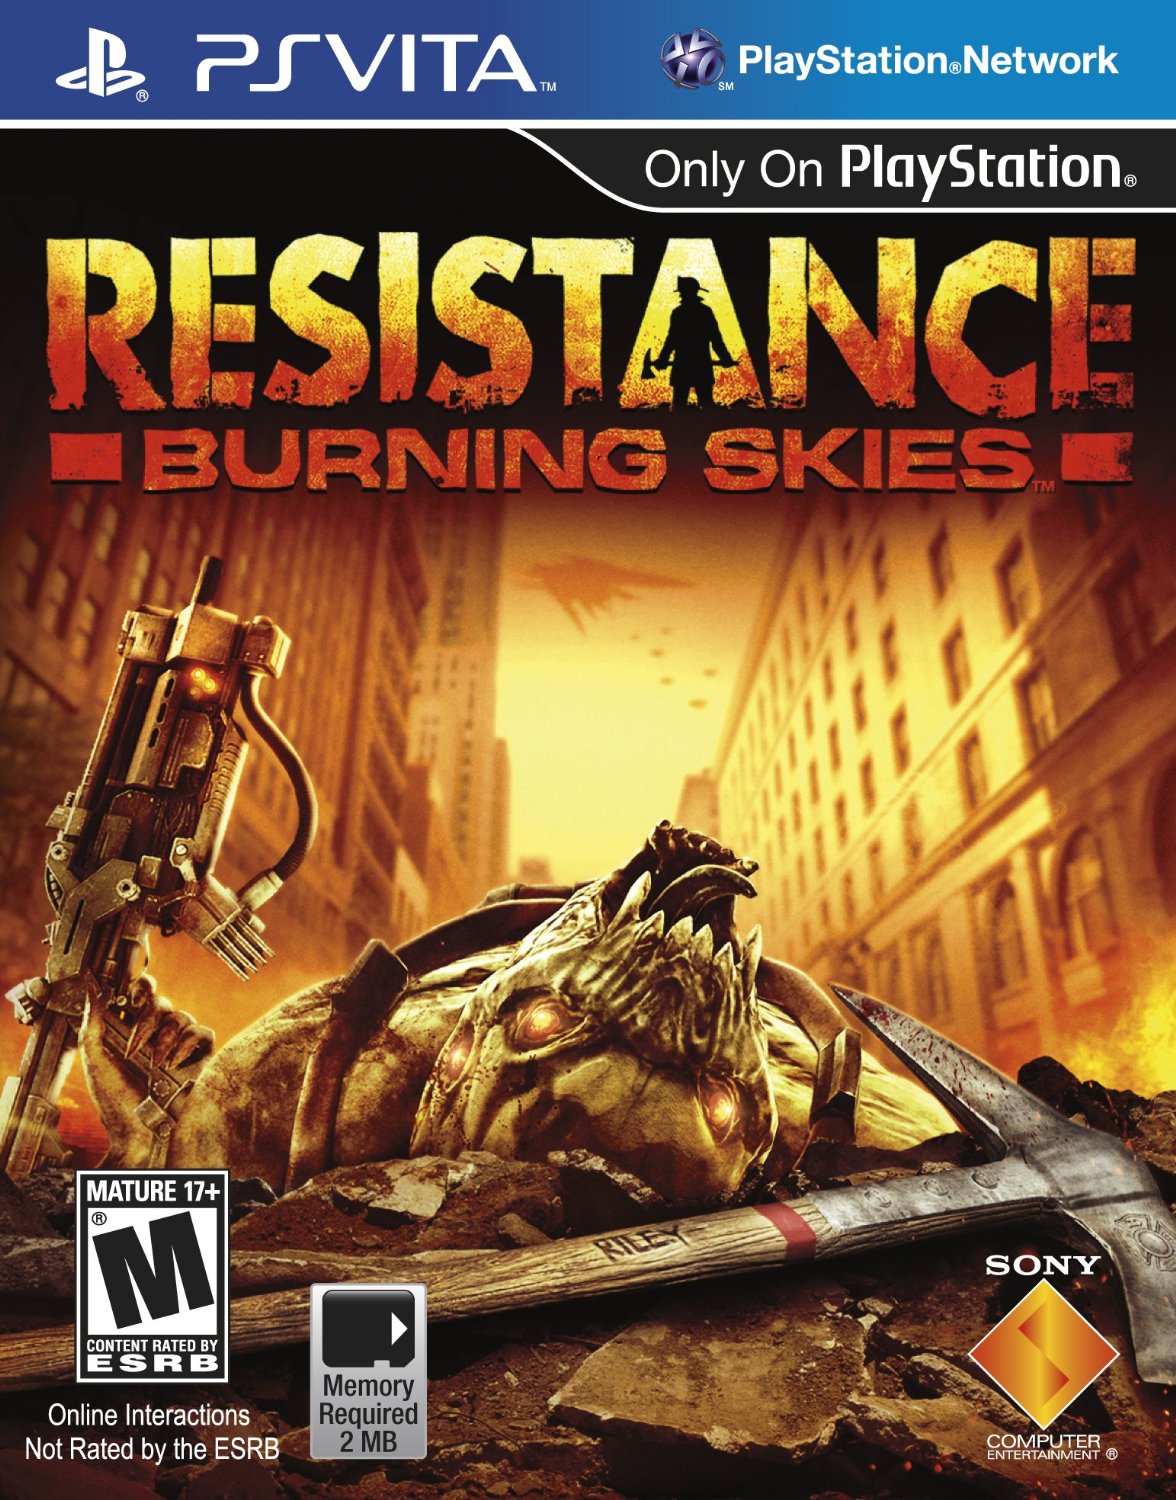 Sony - Resistance: Burning Skies - PSVita - image 1 of 8